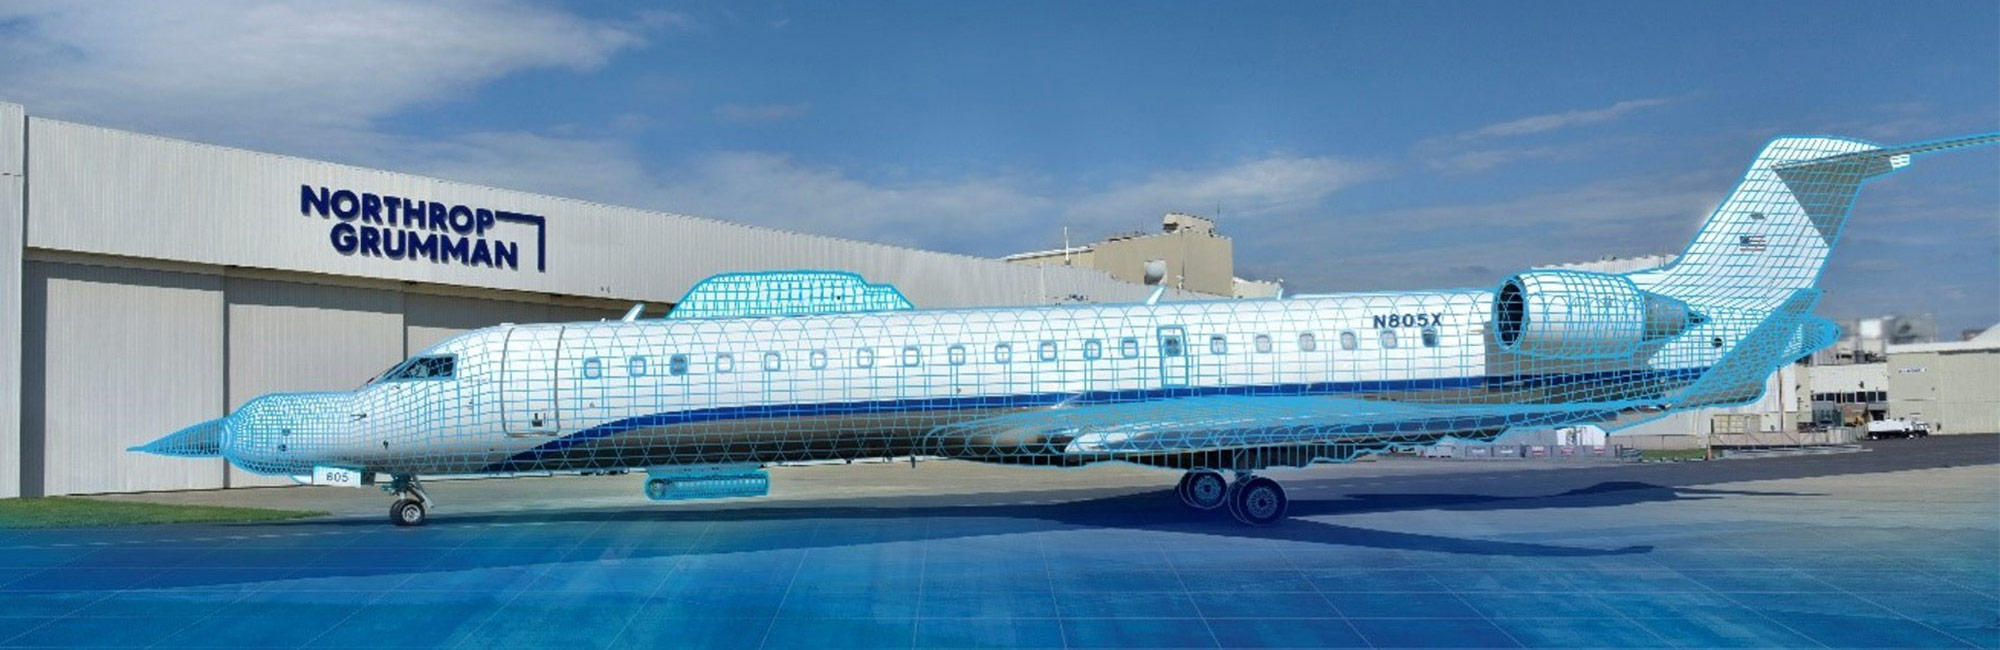 digital plane in front of hangar